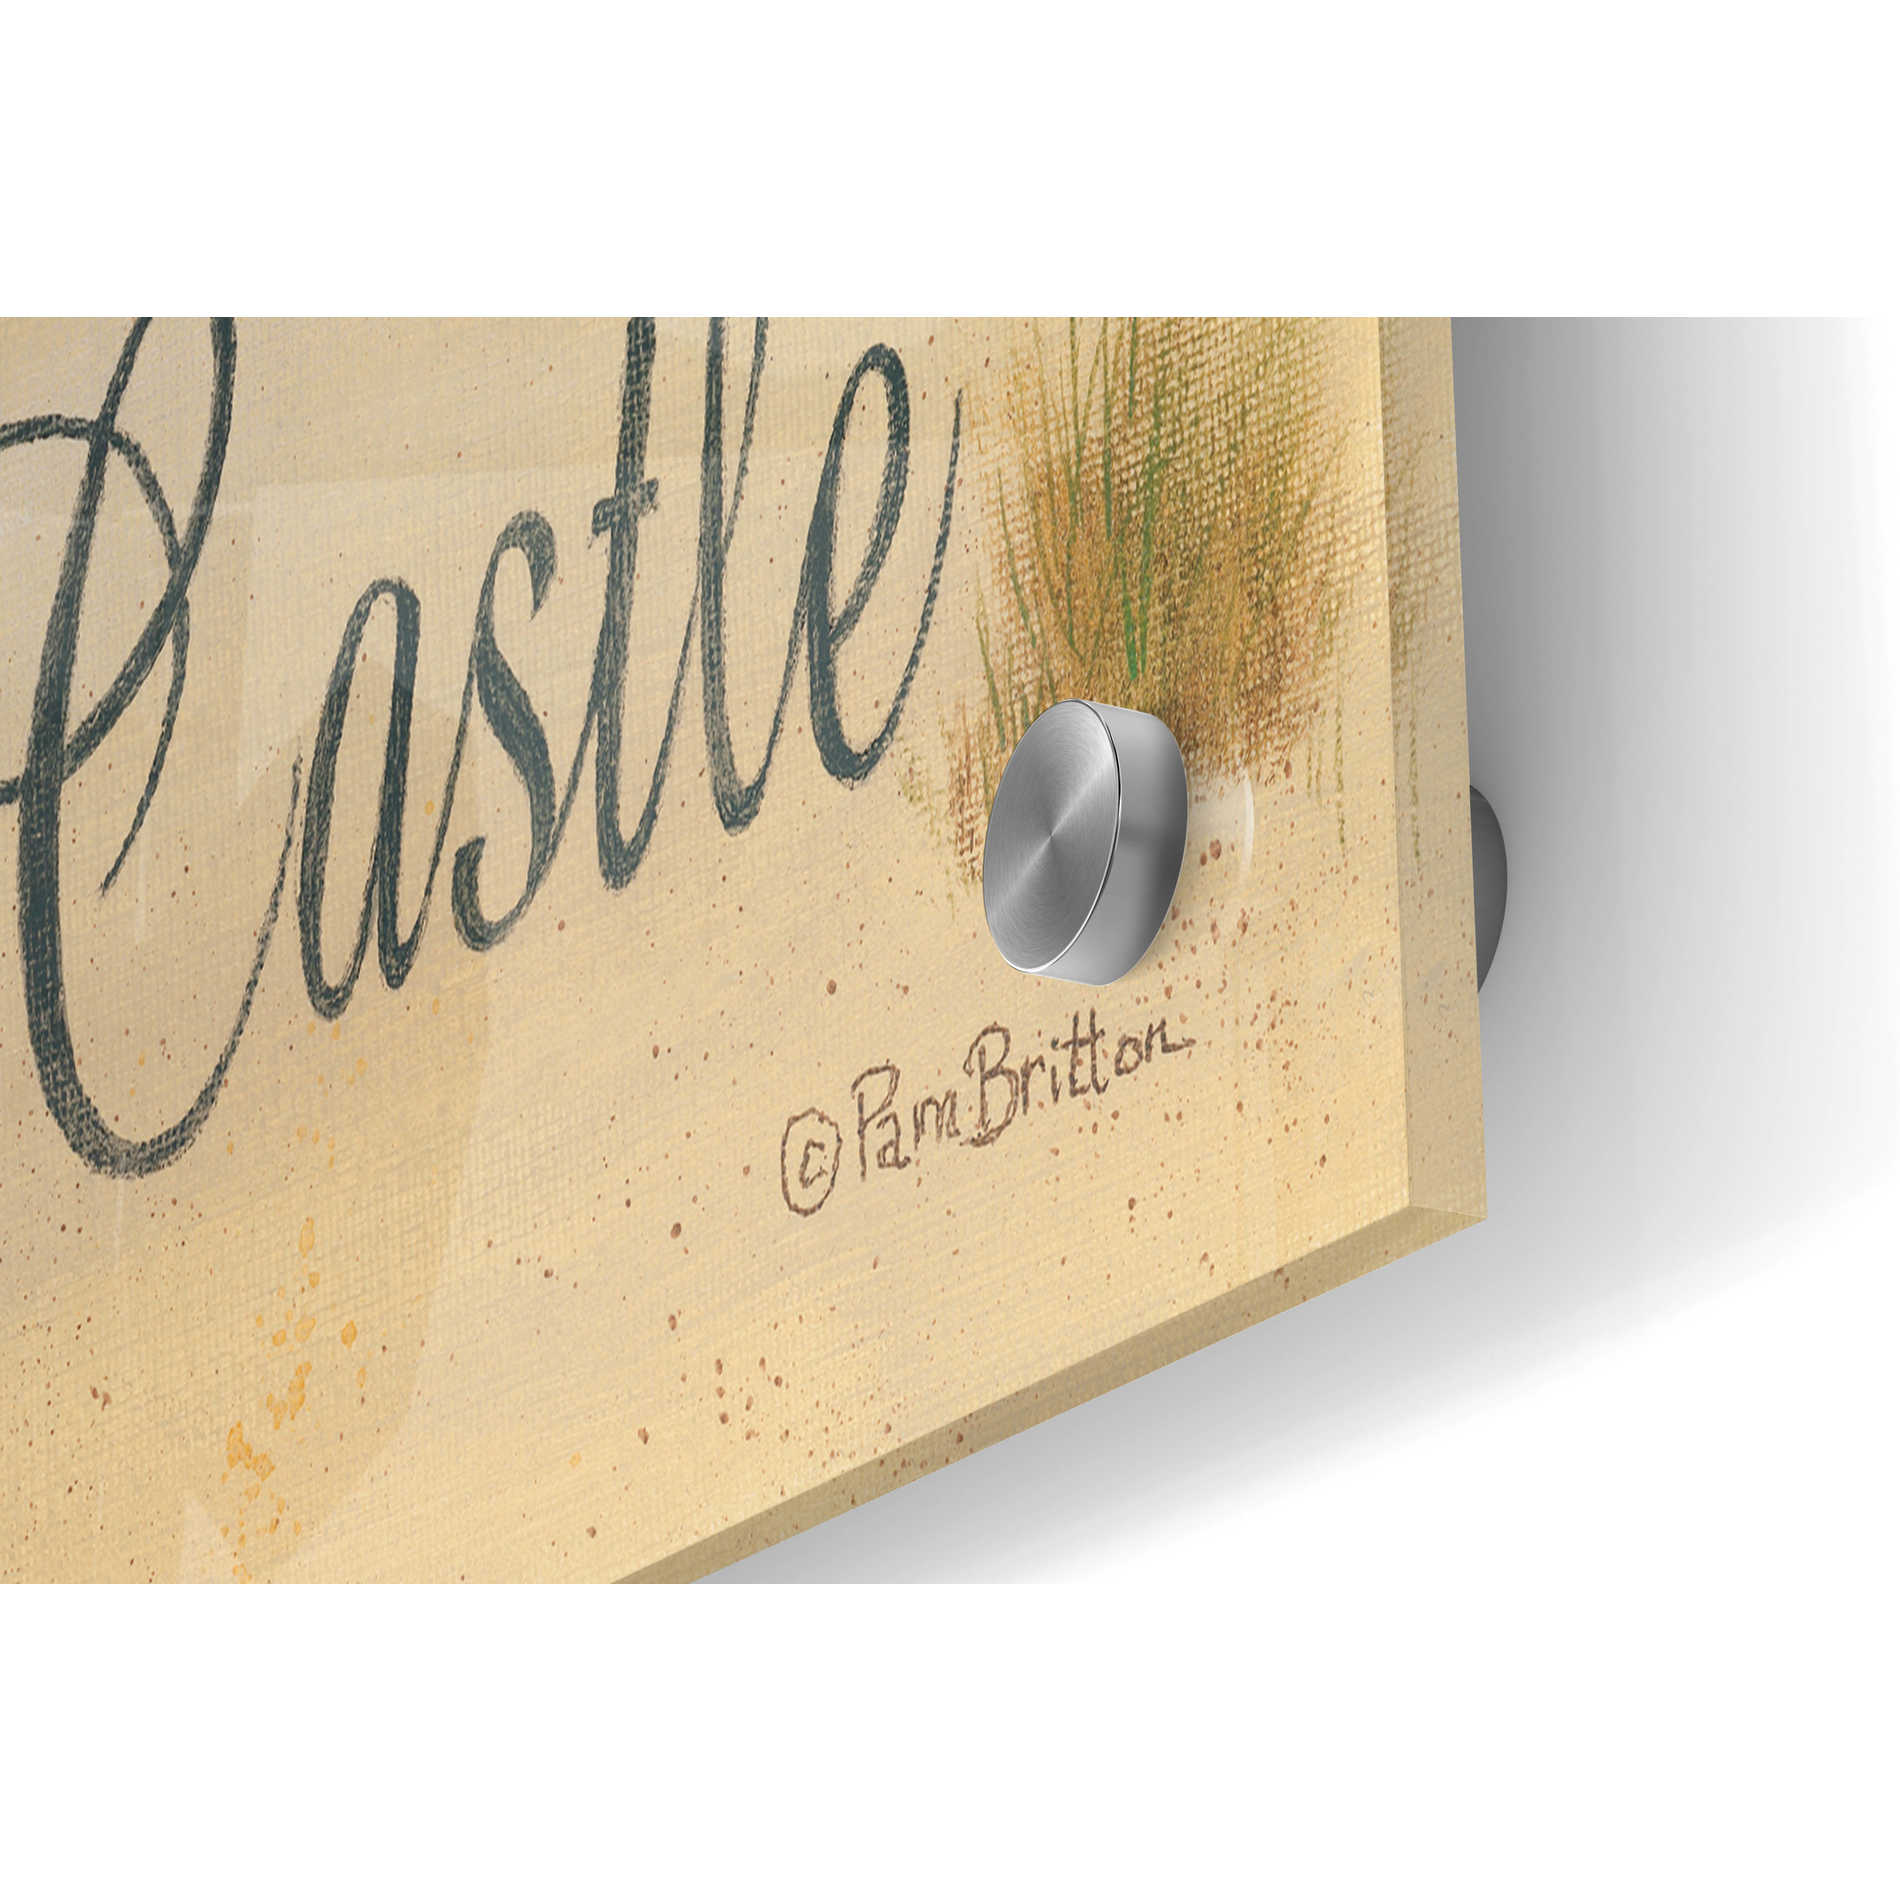 Epic Art 'Sandcastle' by Pam Britton, Acrylic Glass Wall Art,36x24